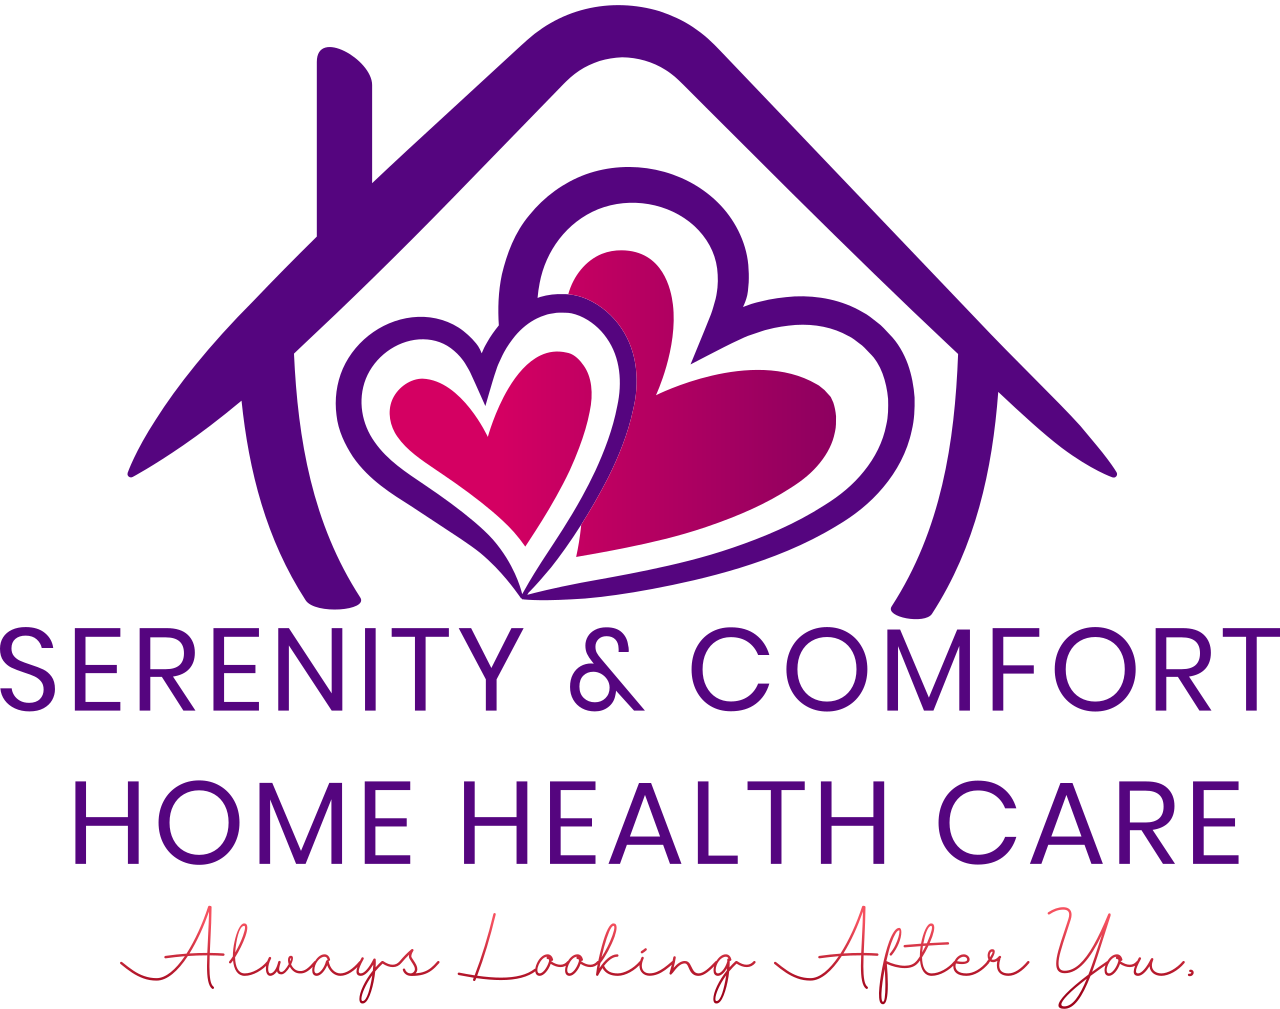 Serenity & Comfort 
Home Health Care's logo